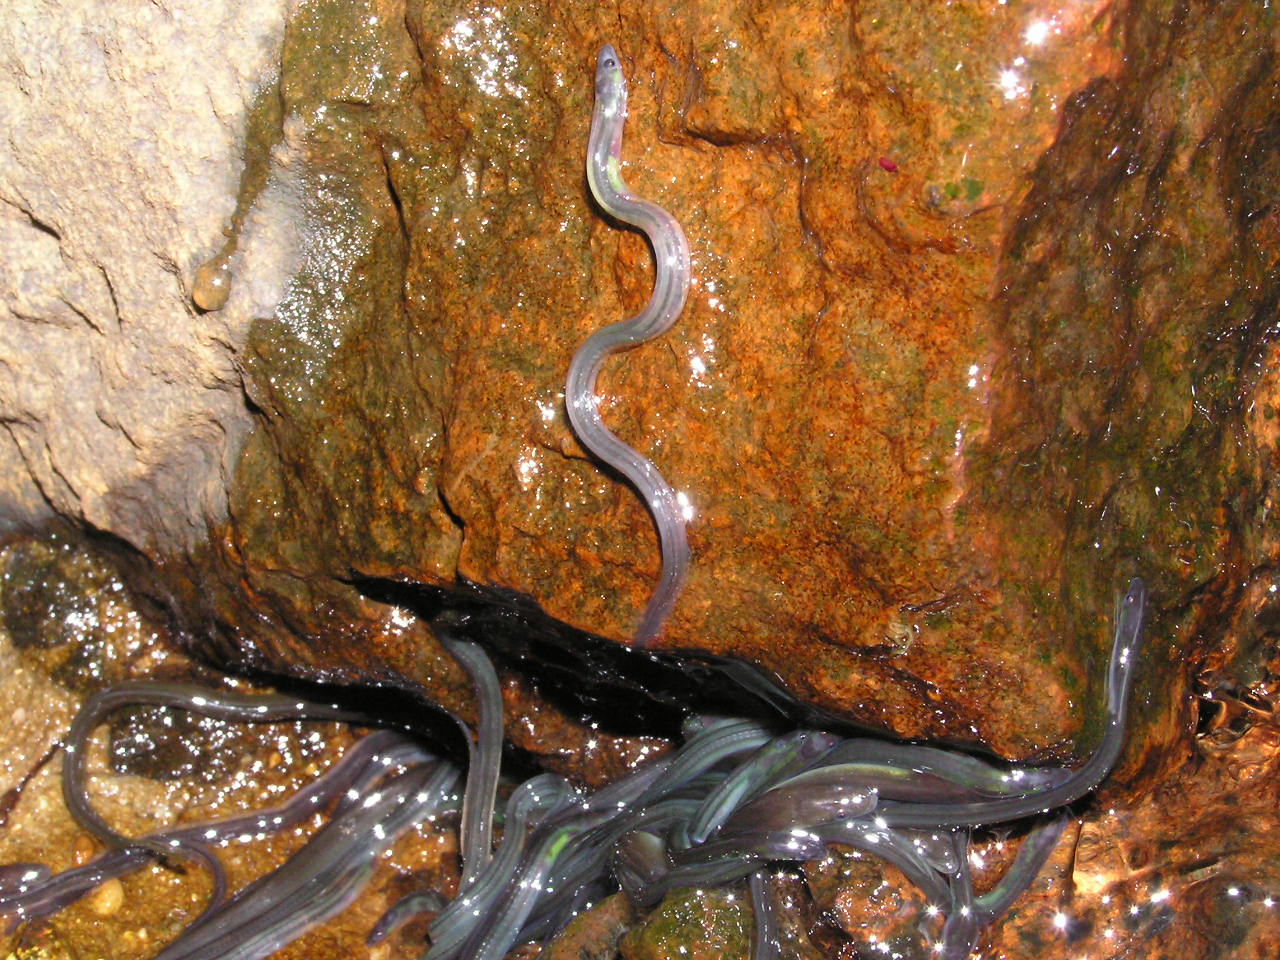 Silver Eels climbing